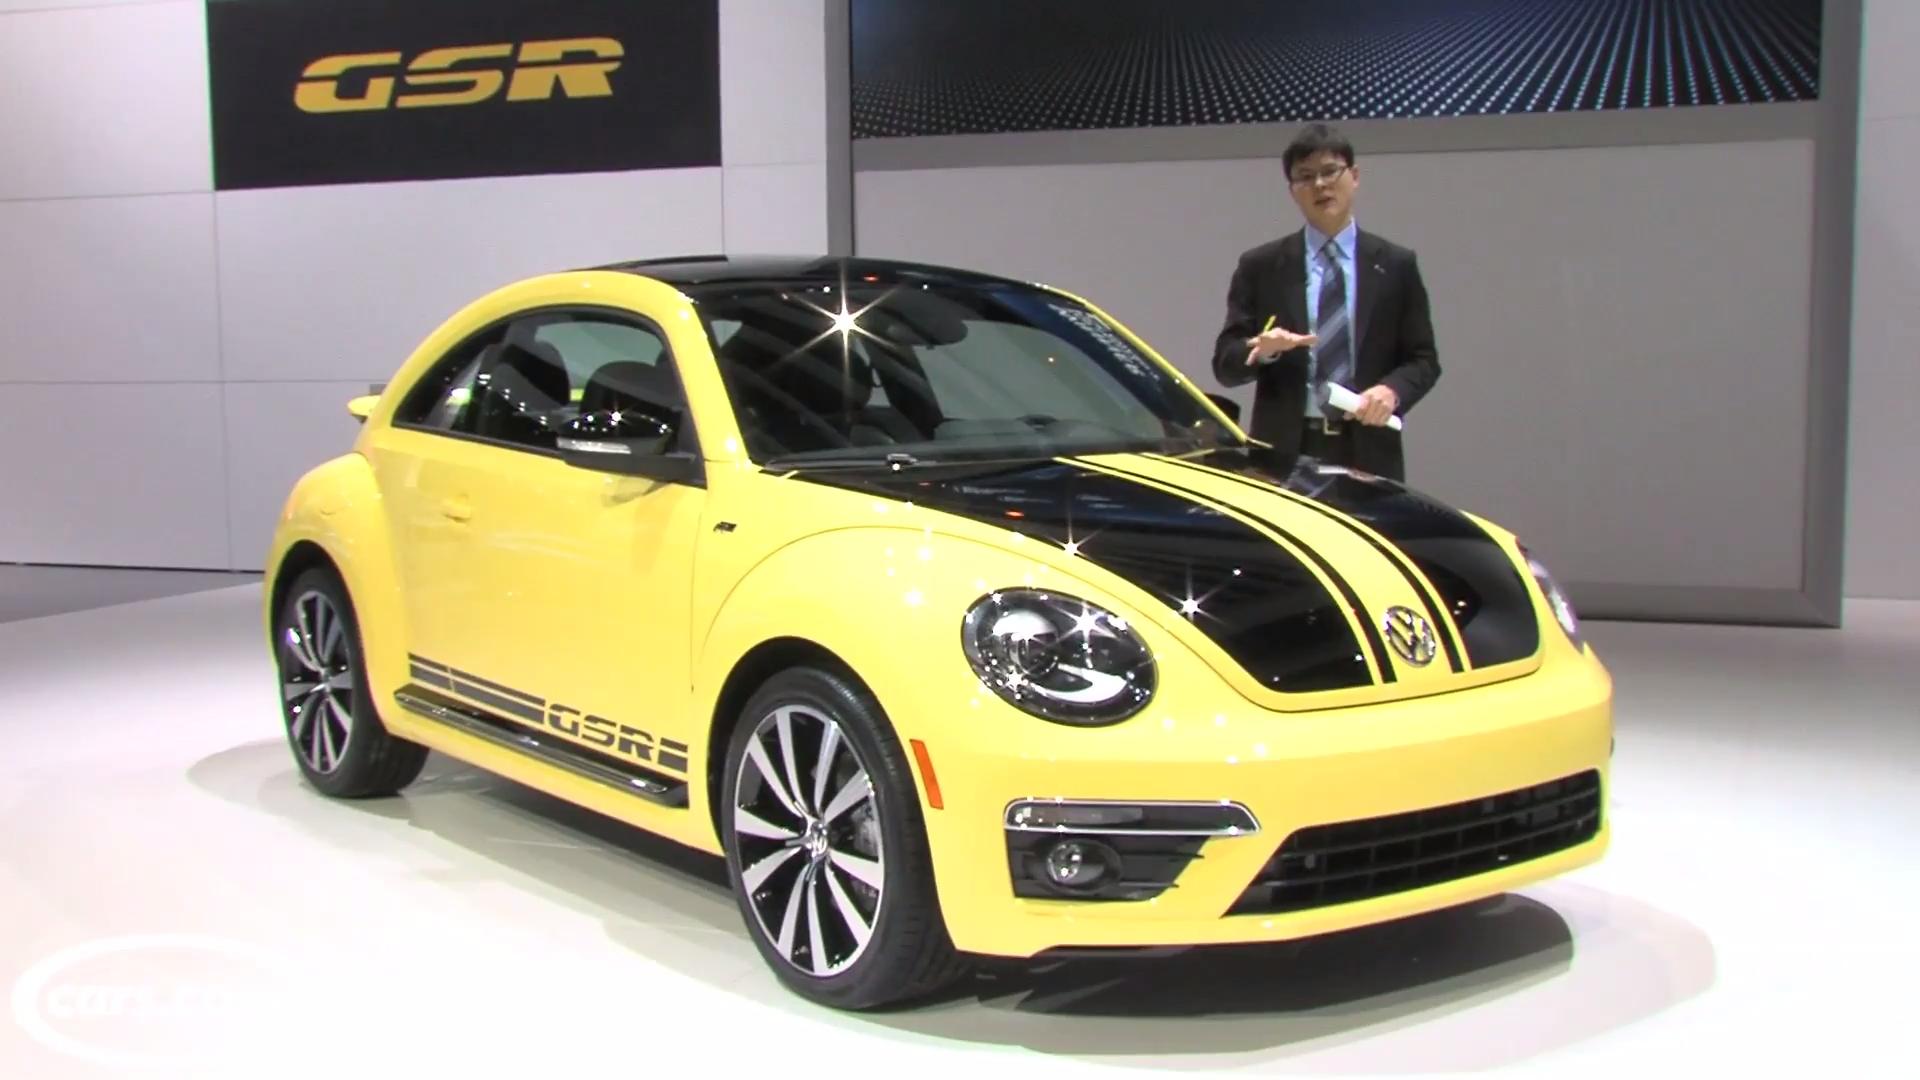 2014 Volkswagen Beetle Expert Reviews, Specs and Photos | Cars.com